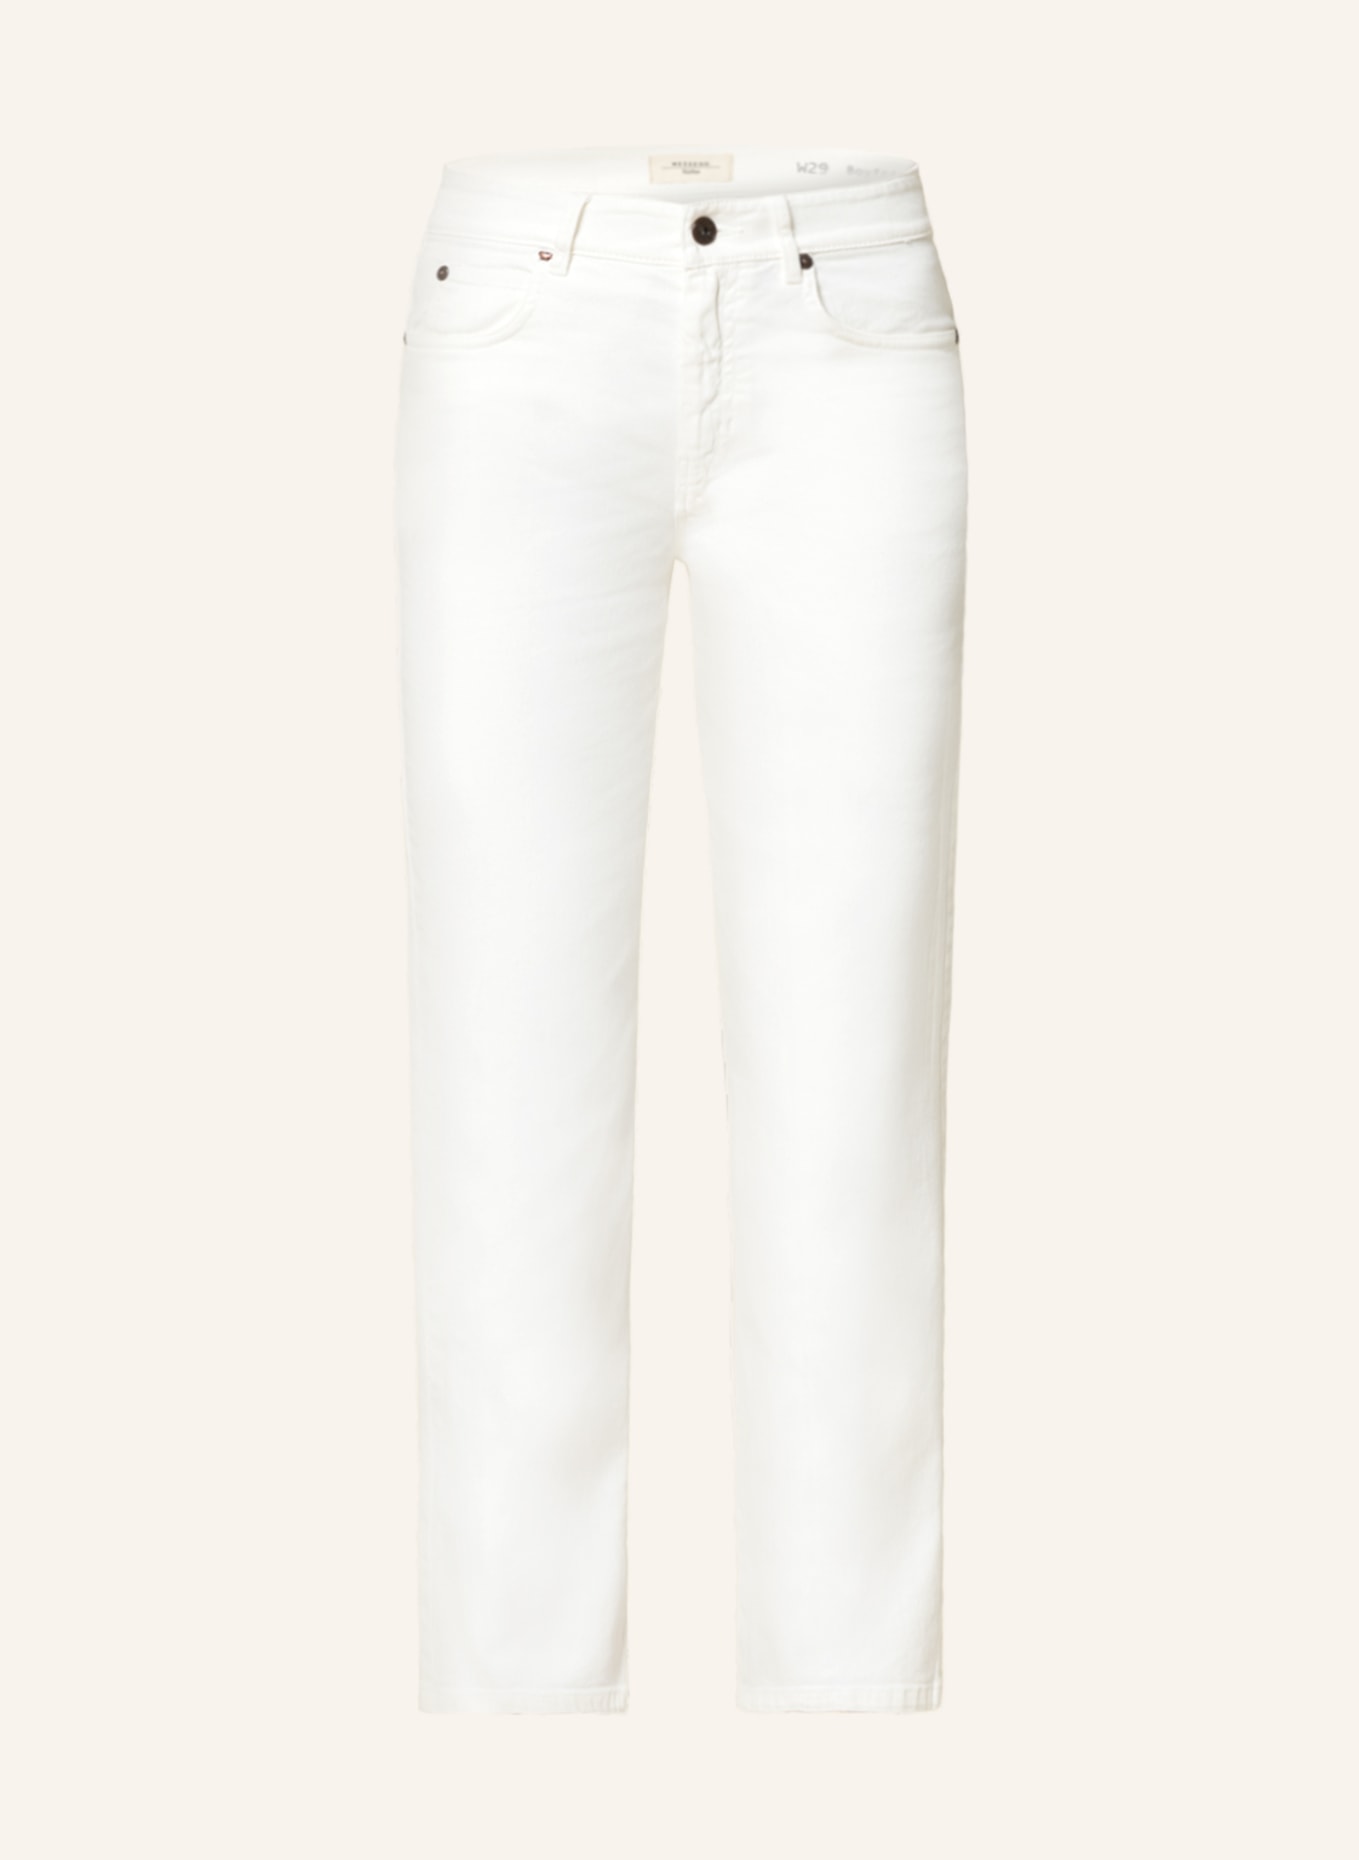 Max Mara white jeans . Flexible, IT40